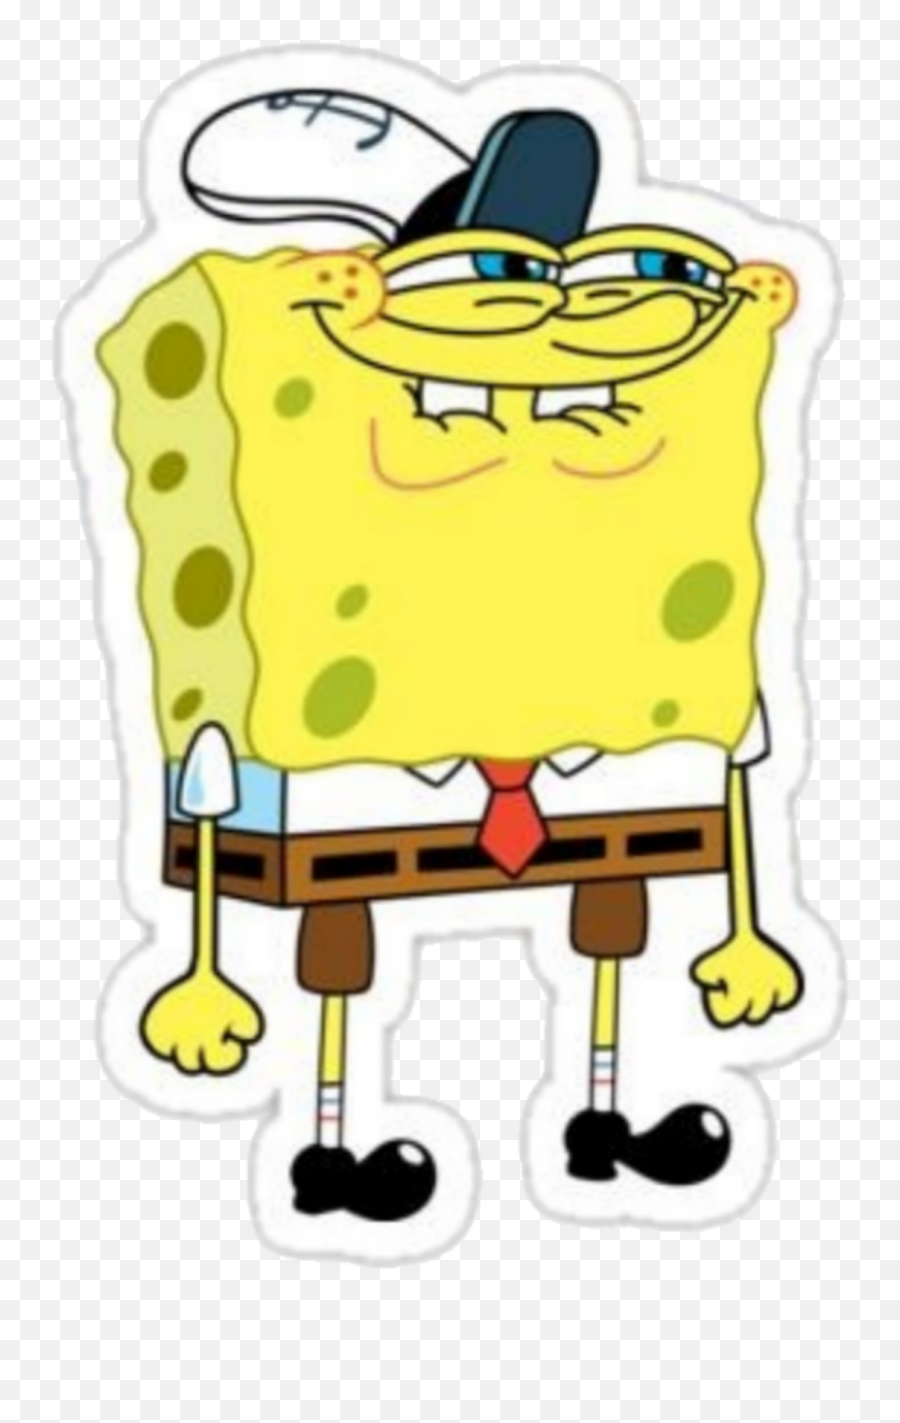 Spongebob Squarepants Sponge Square - Spongbob Smiling Emoji,Spongebbob Emojis With Text